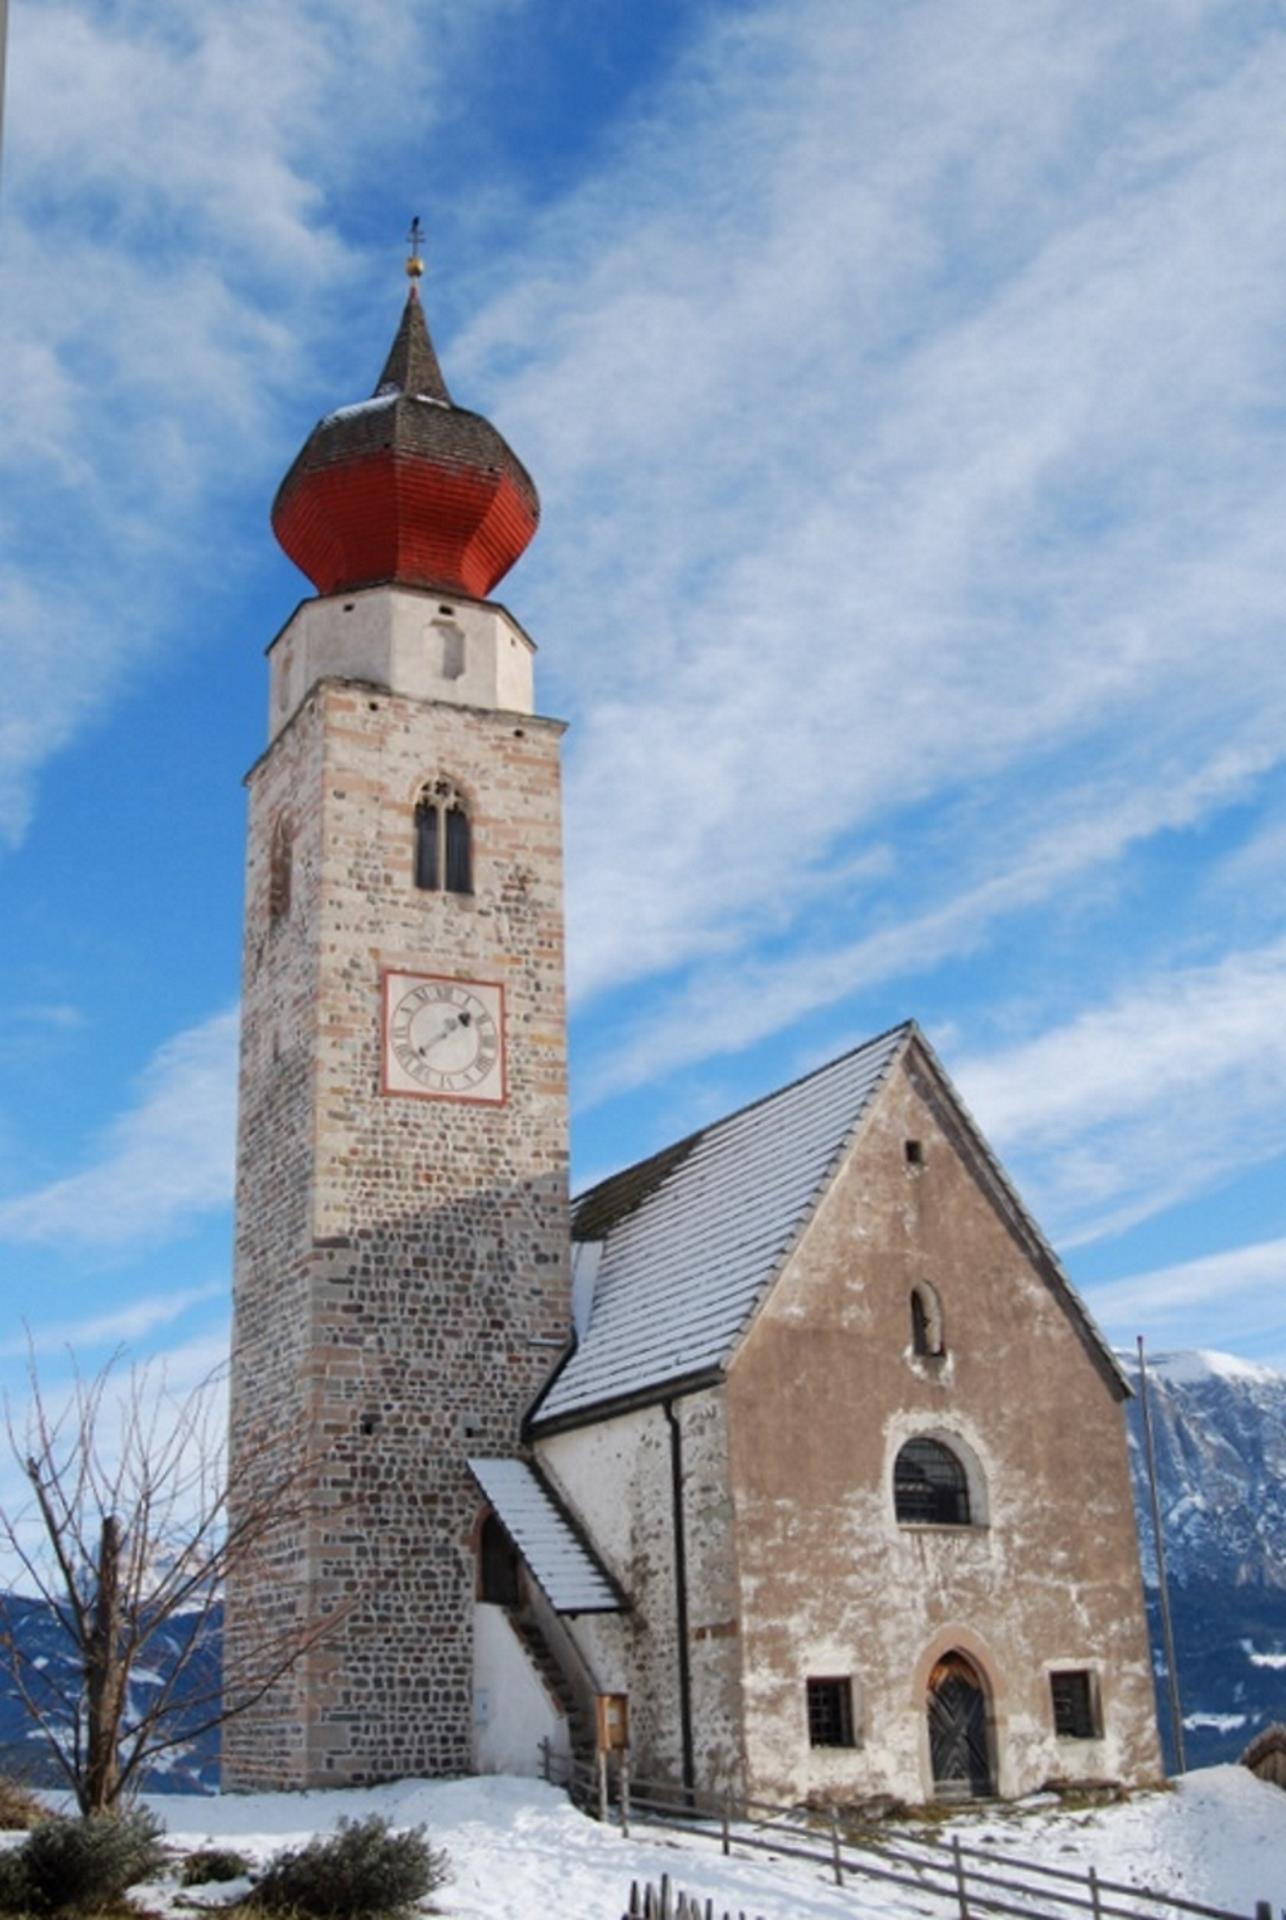 St Nicholas church in Mittelberg